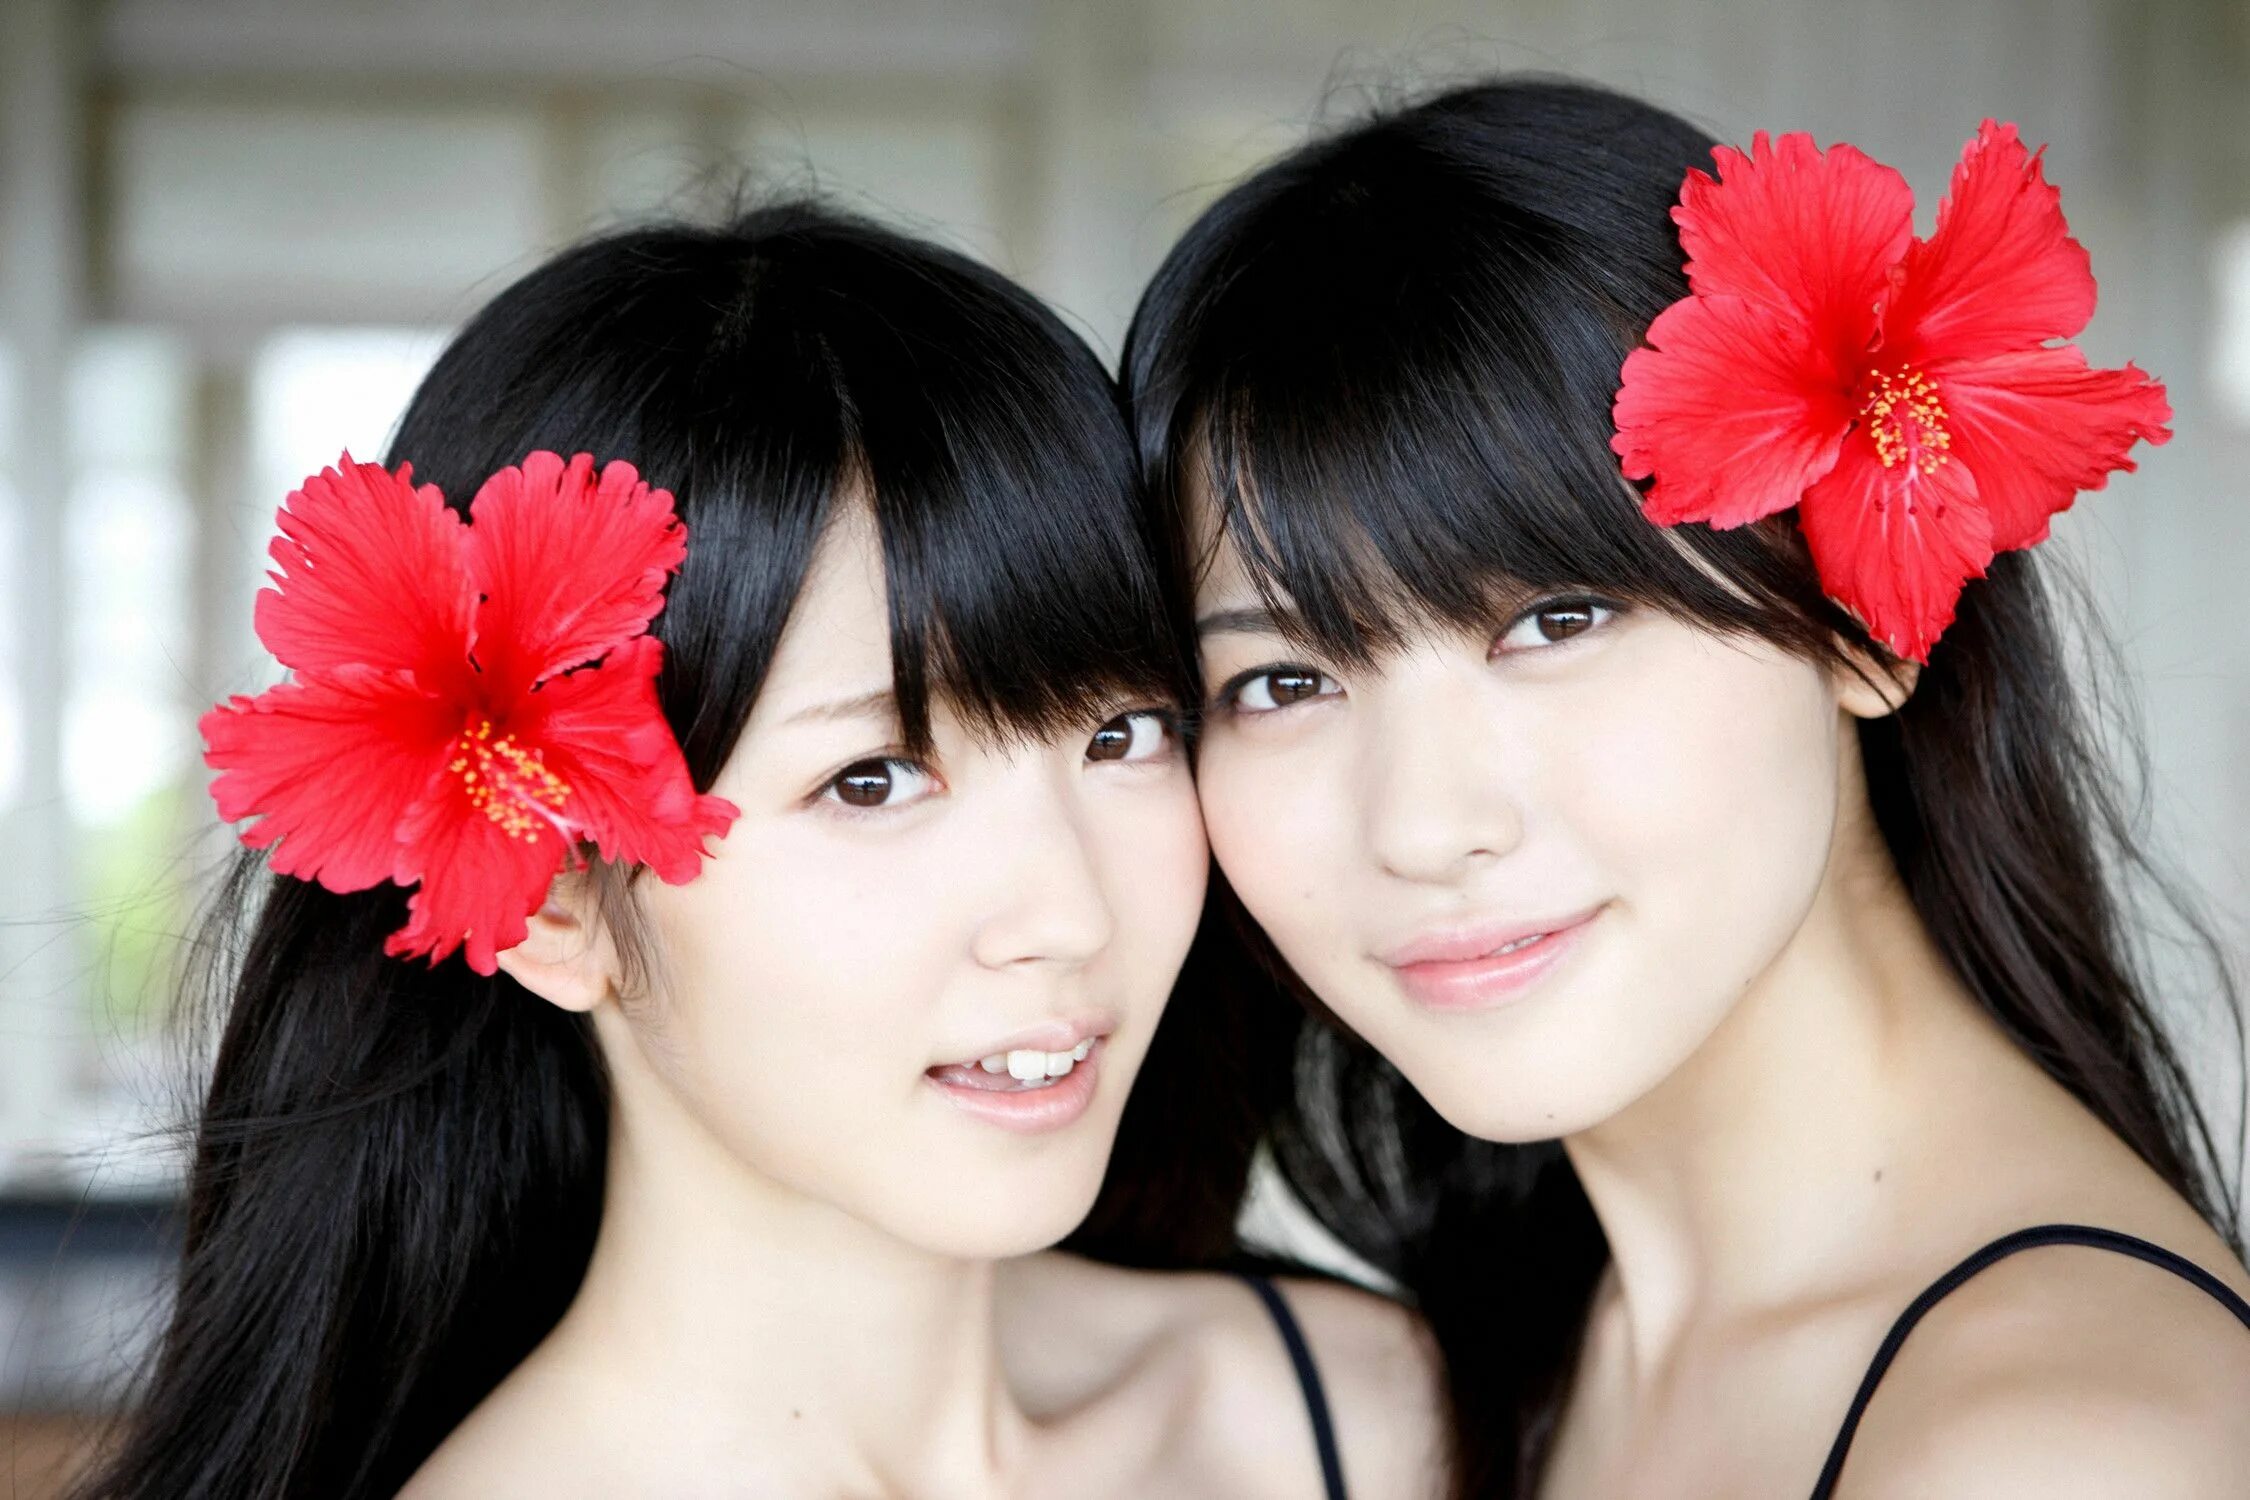 Airi Suzuki and Maimi Yajima. Японские девушки подруги. Японские девушки для любви. Японские девочки групповое.